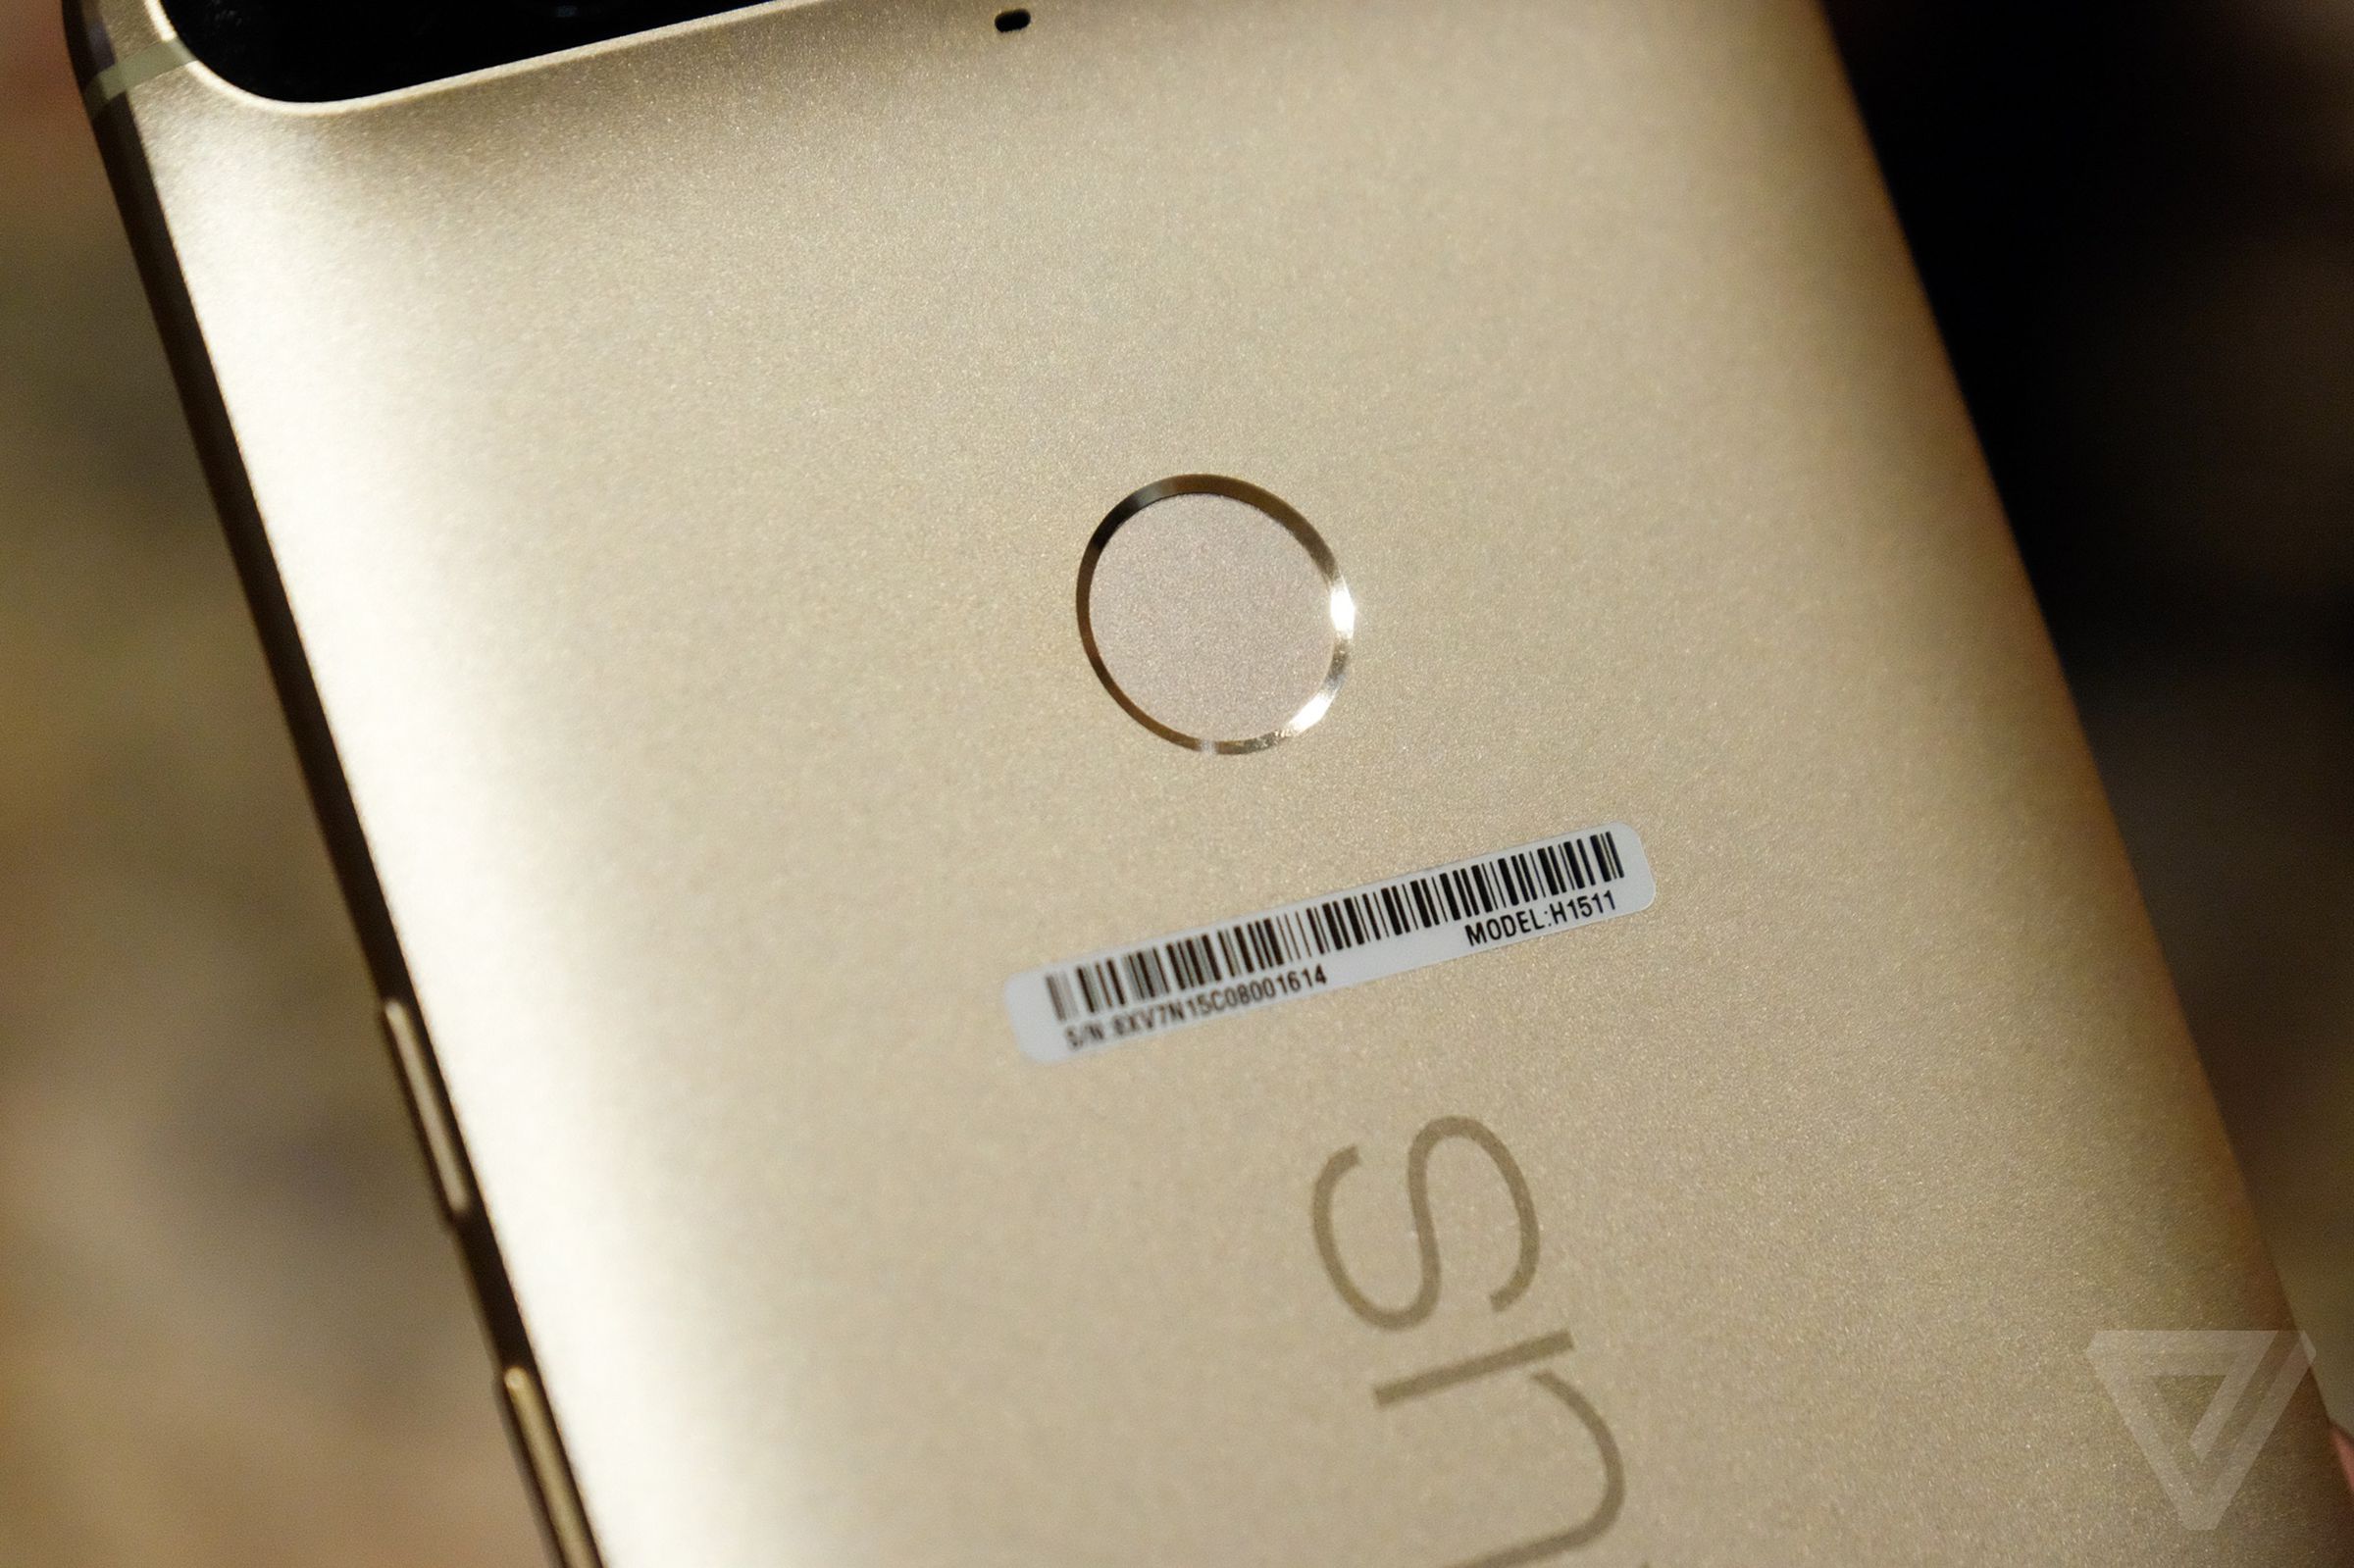 Gold Nexus 6P photos